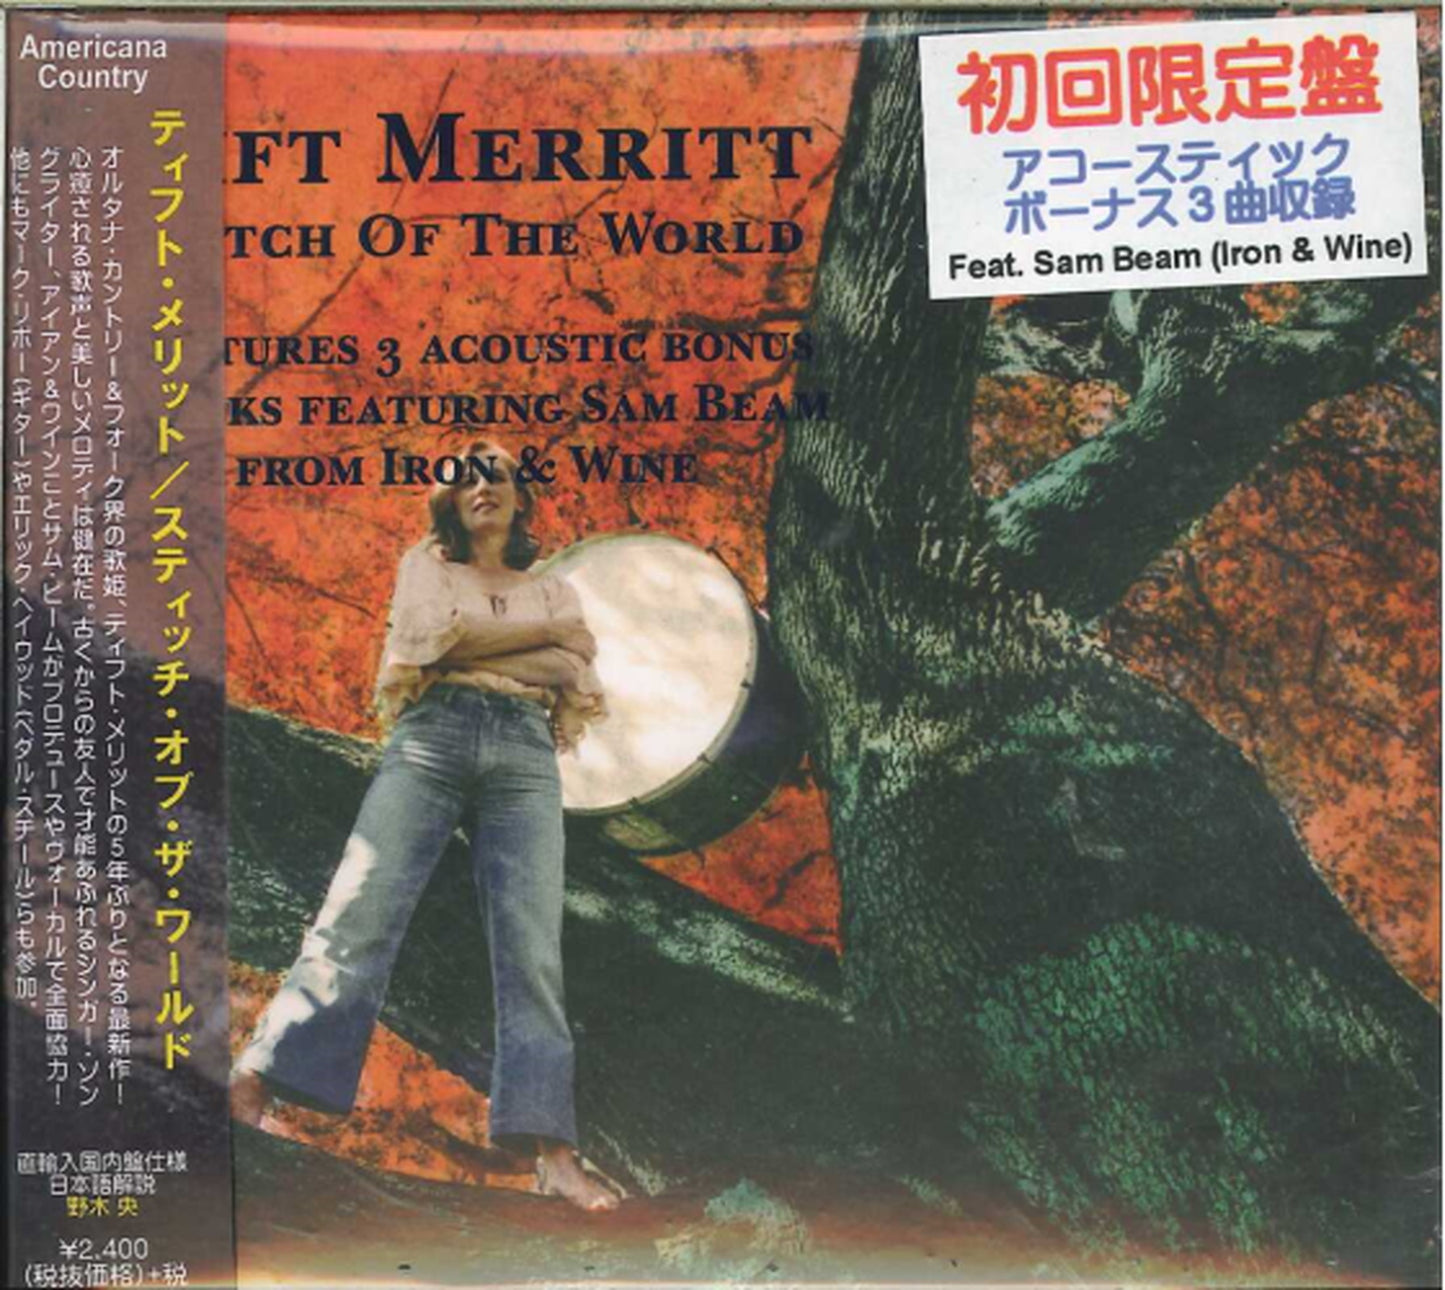 Tift Merritt - Stitch Of The World - Japan  CD Bonus Track